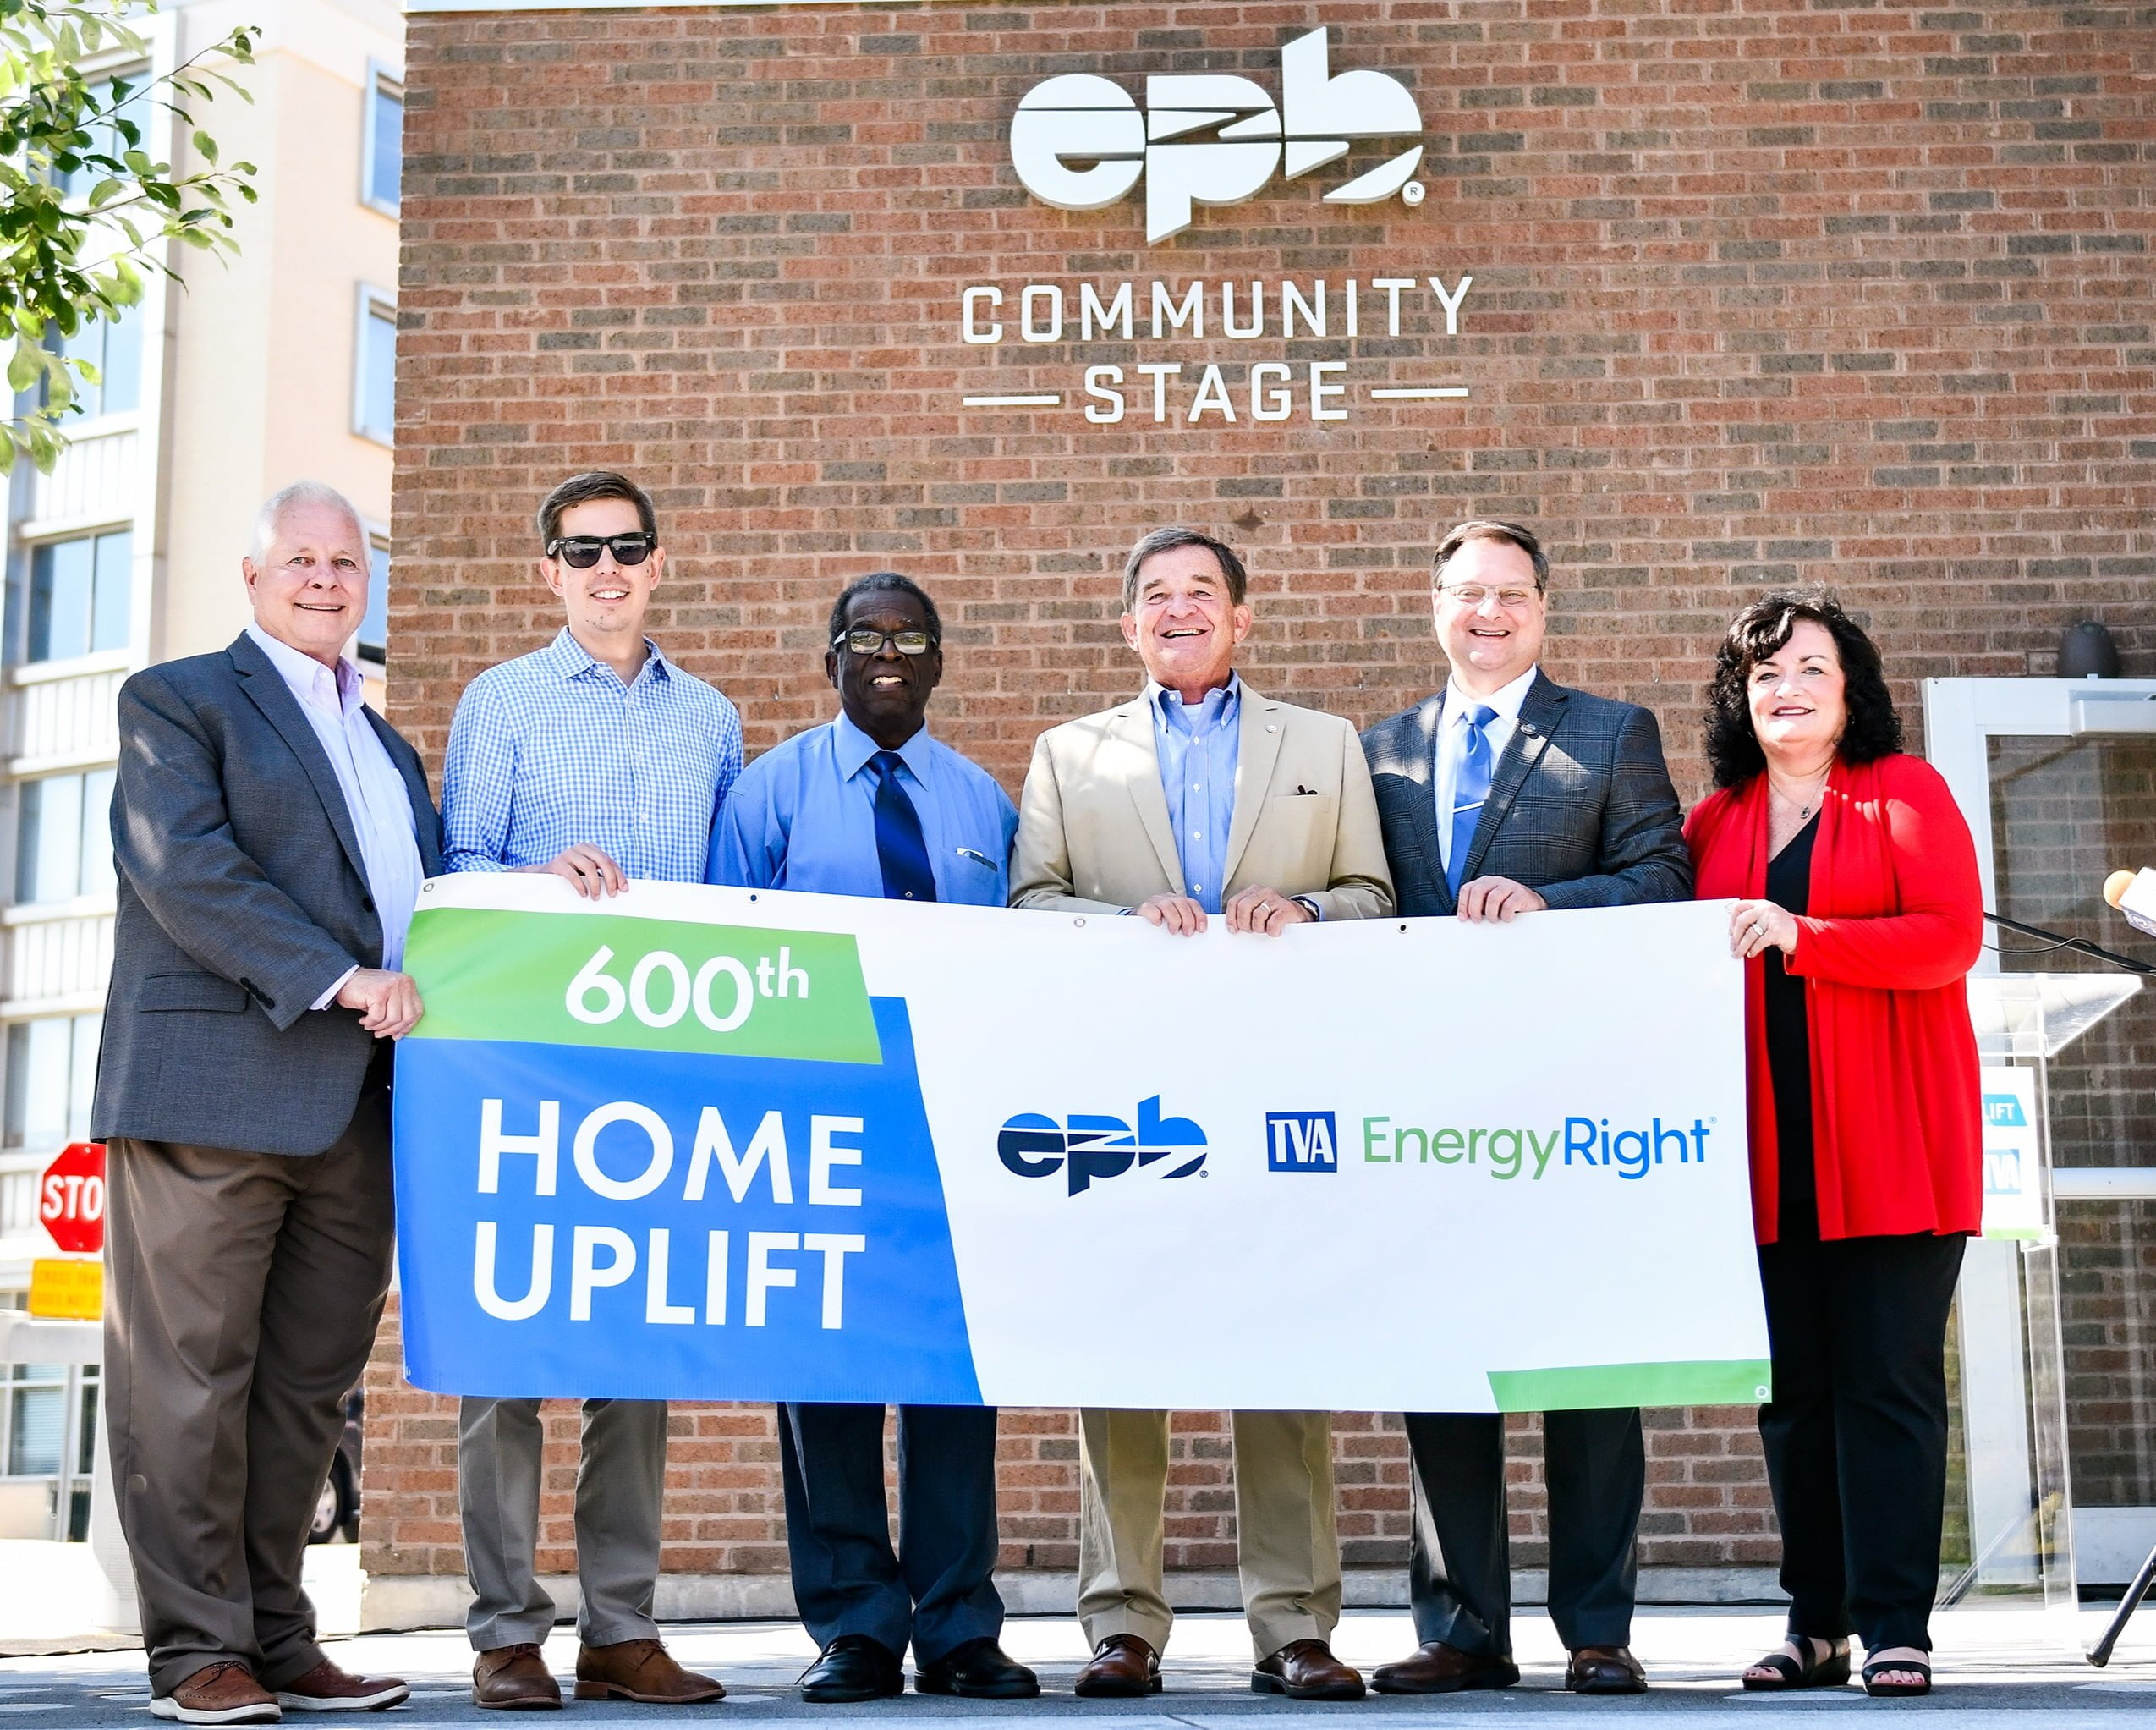 epb-tva-complete-600th-home-uplift-energy-renovation-announce